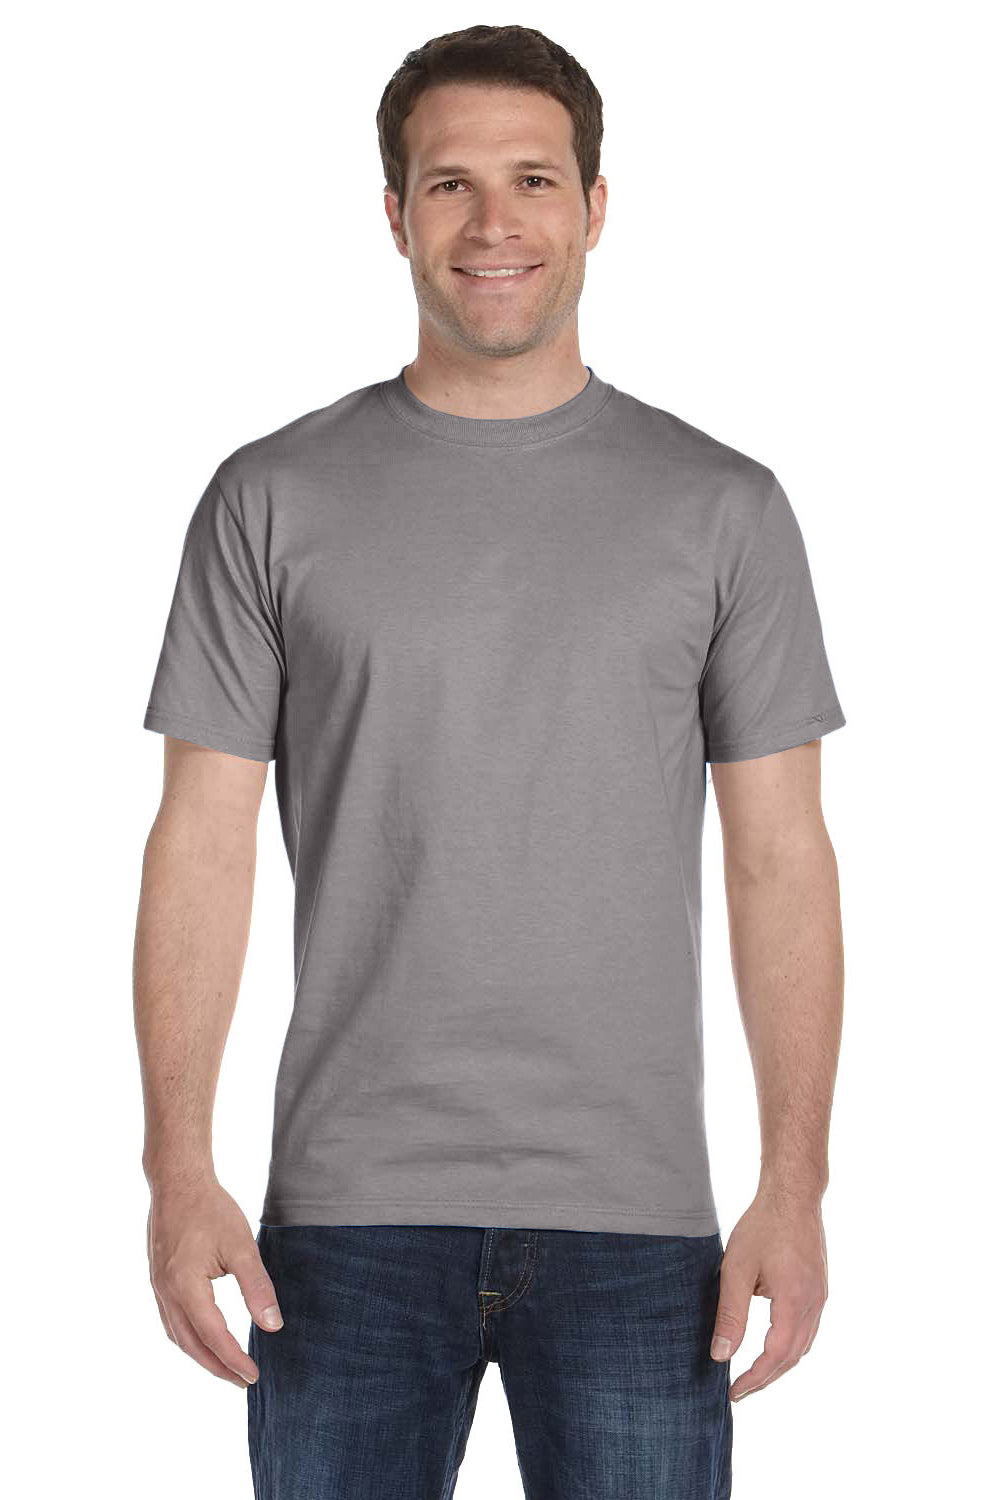 Hanes 5280 Mens ComfortSoft Short Sleeve Crewneck T-Shirt Graphite Grey Front